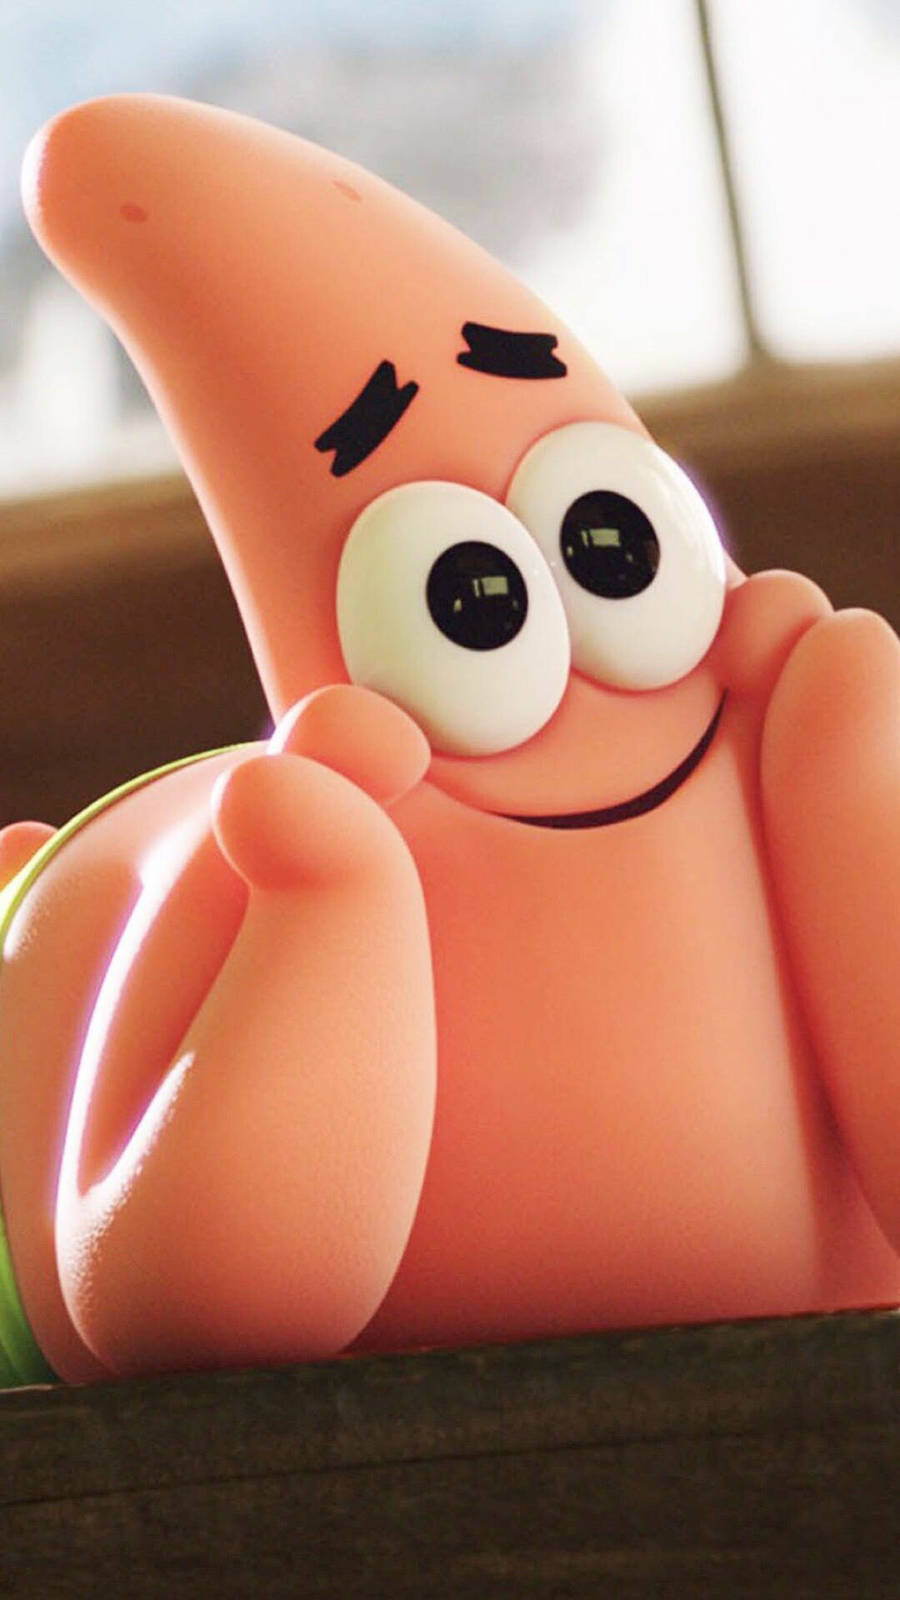 Smiling Patrick Cartoon Iphone Background